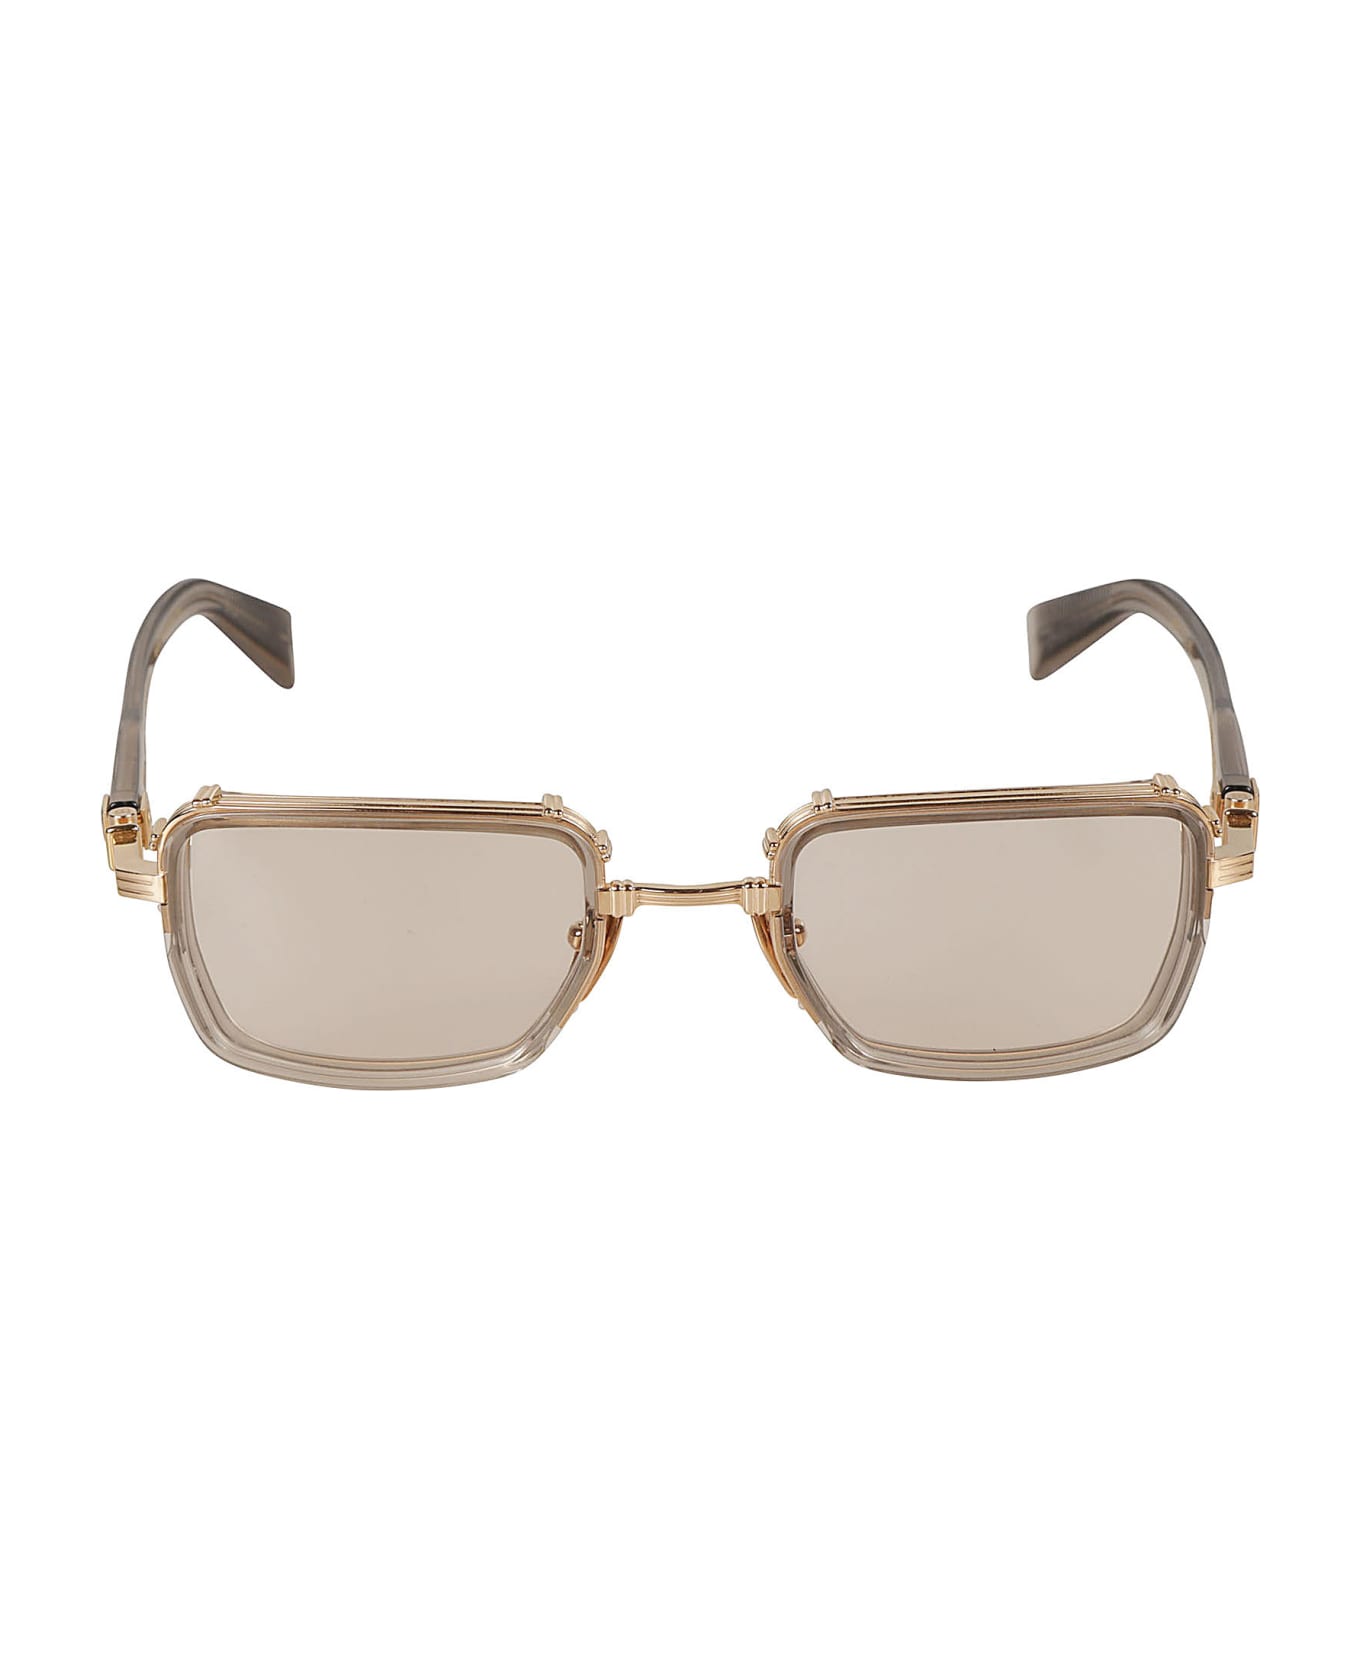 Balmain Saint Jean Sunglasses Sunglasses - Gold/Grey